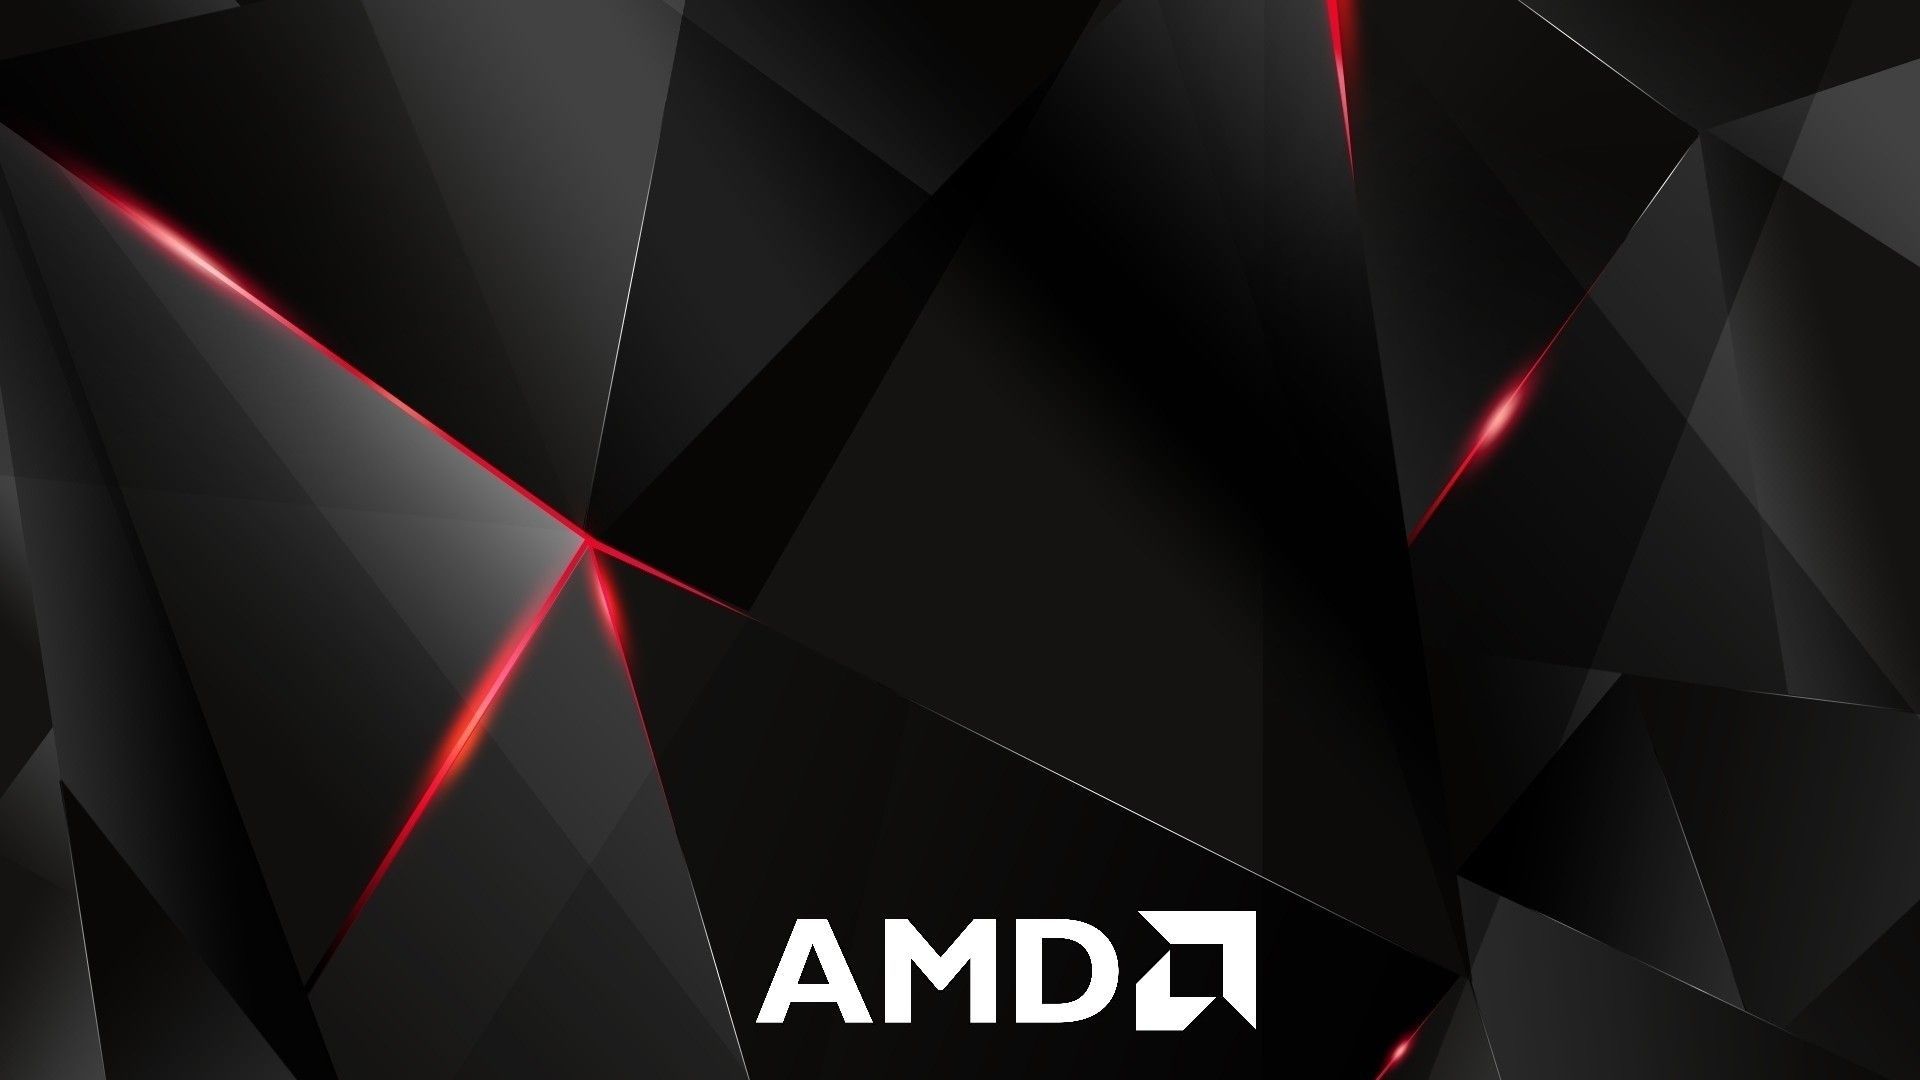 AMD Gaming Wallpaper Free AMD .wallpaperaccess.com